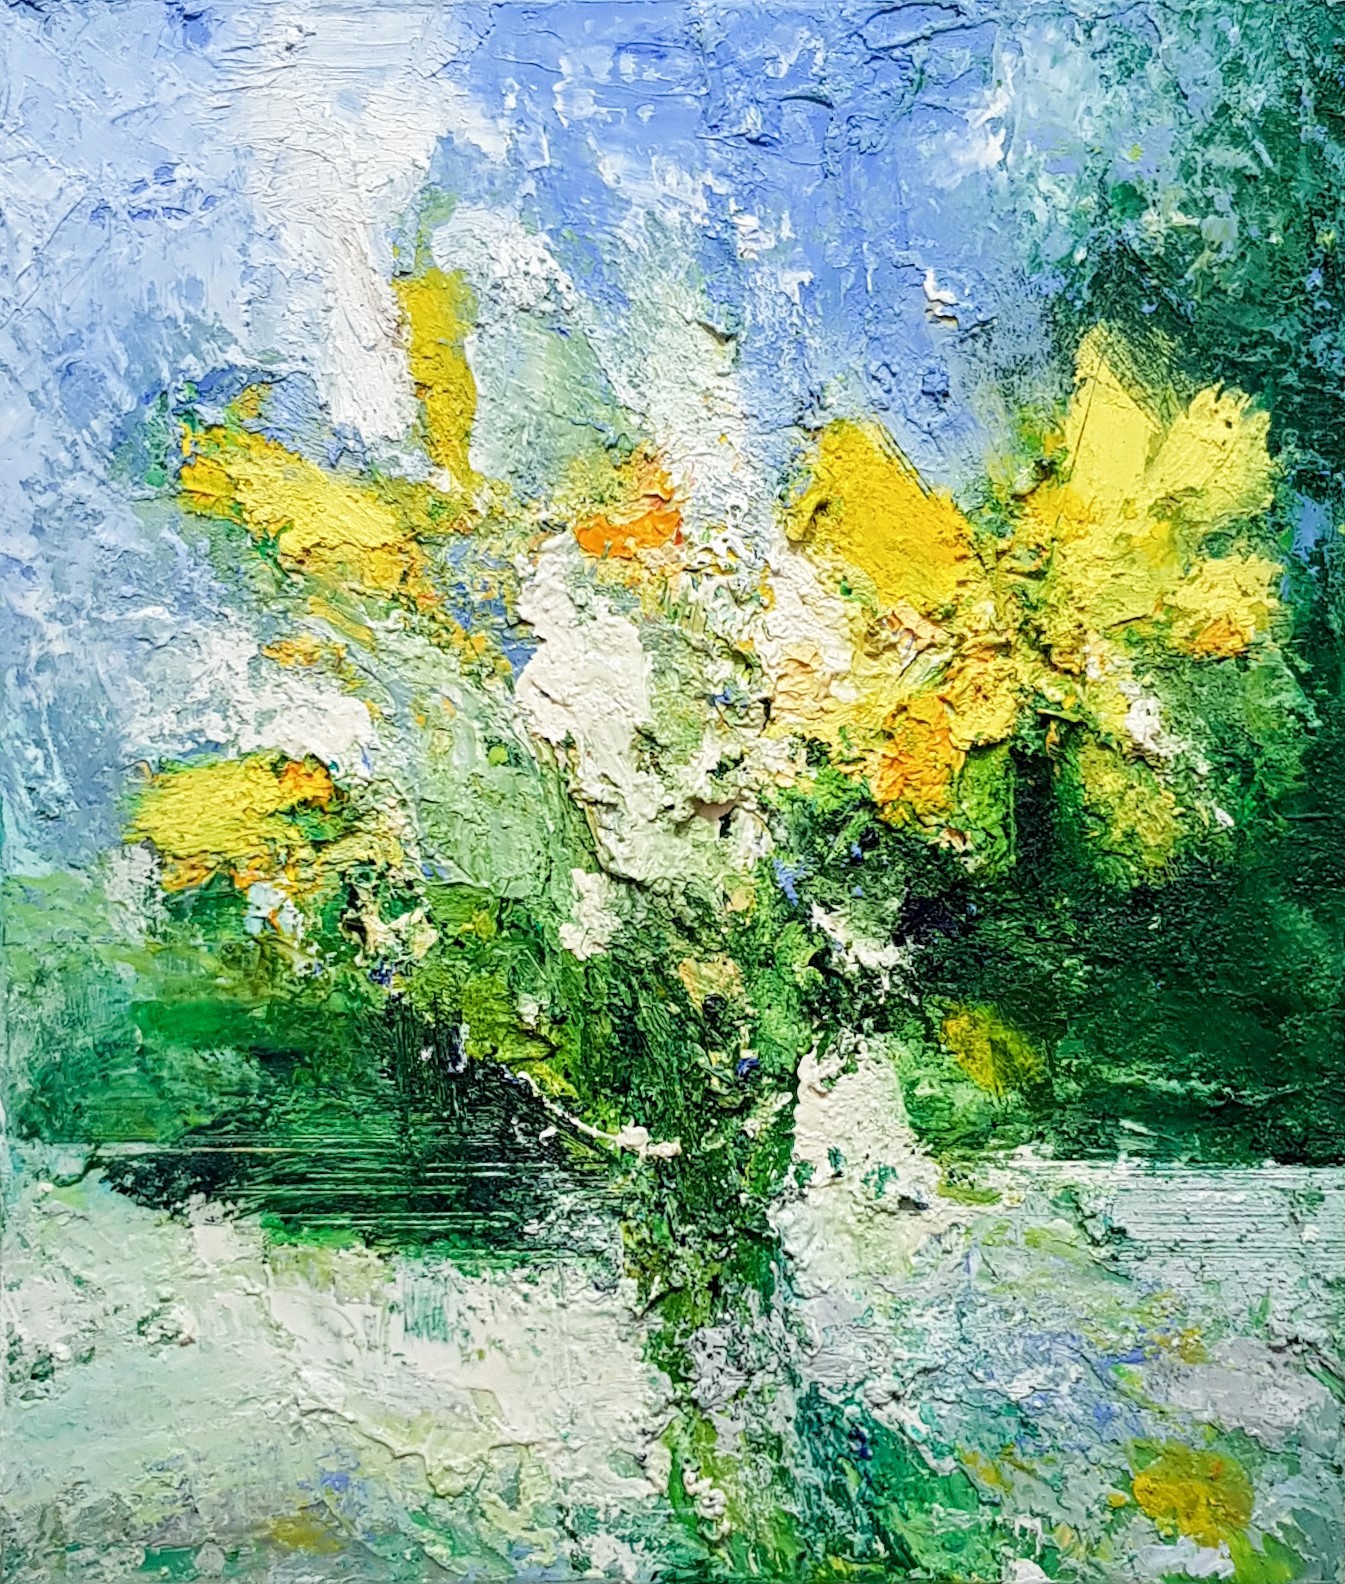 'Daffodils, Window Sill, Blue Sky' by artist Matthew Bourne